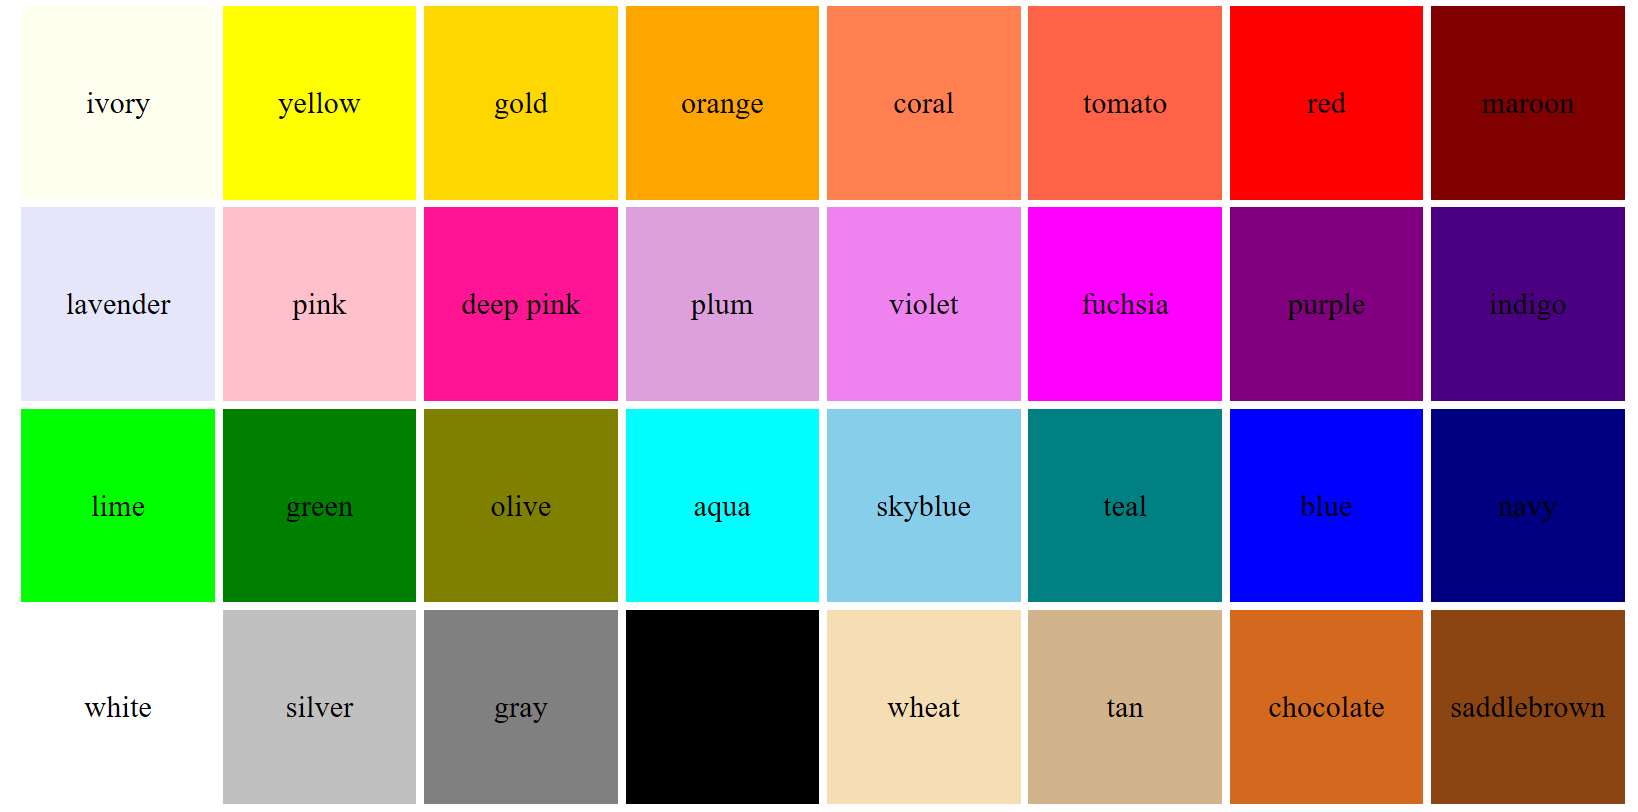 Палитра на английском. Цвета html. Палитра цветов. Оттенки цветов html. Цвет имени.